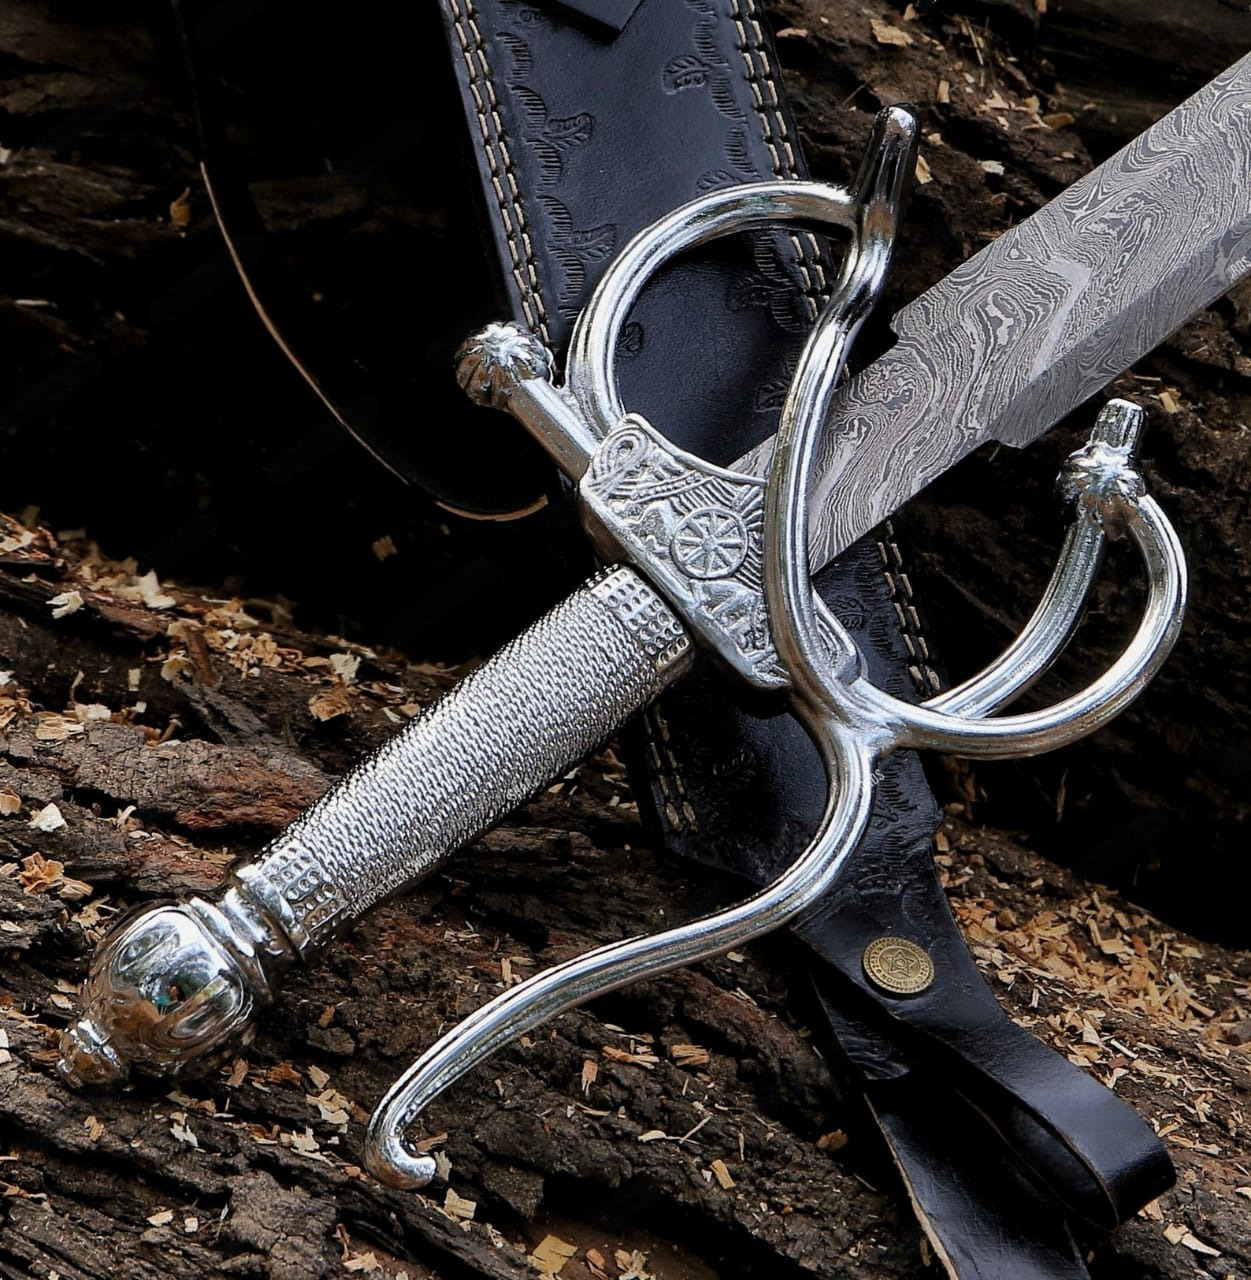 Marvelous Handmade Damascus Steel Medieval / Rapier Sword With Leather Sheath.